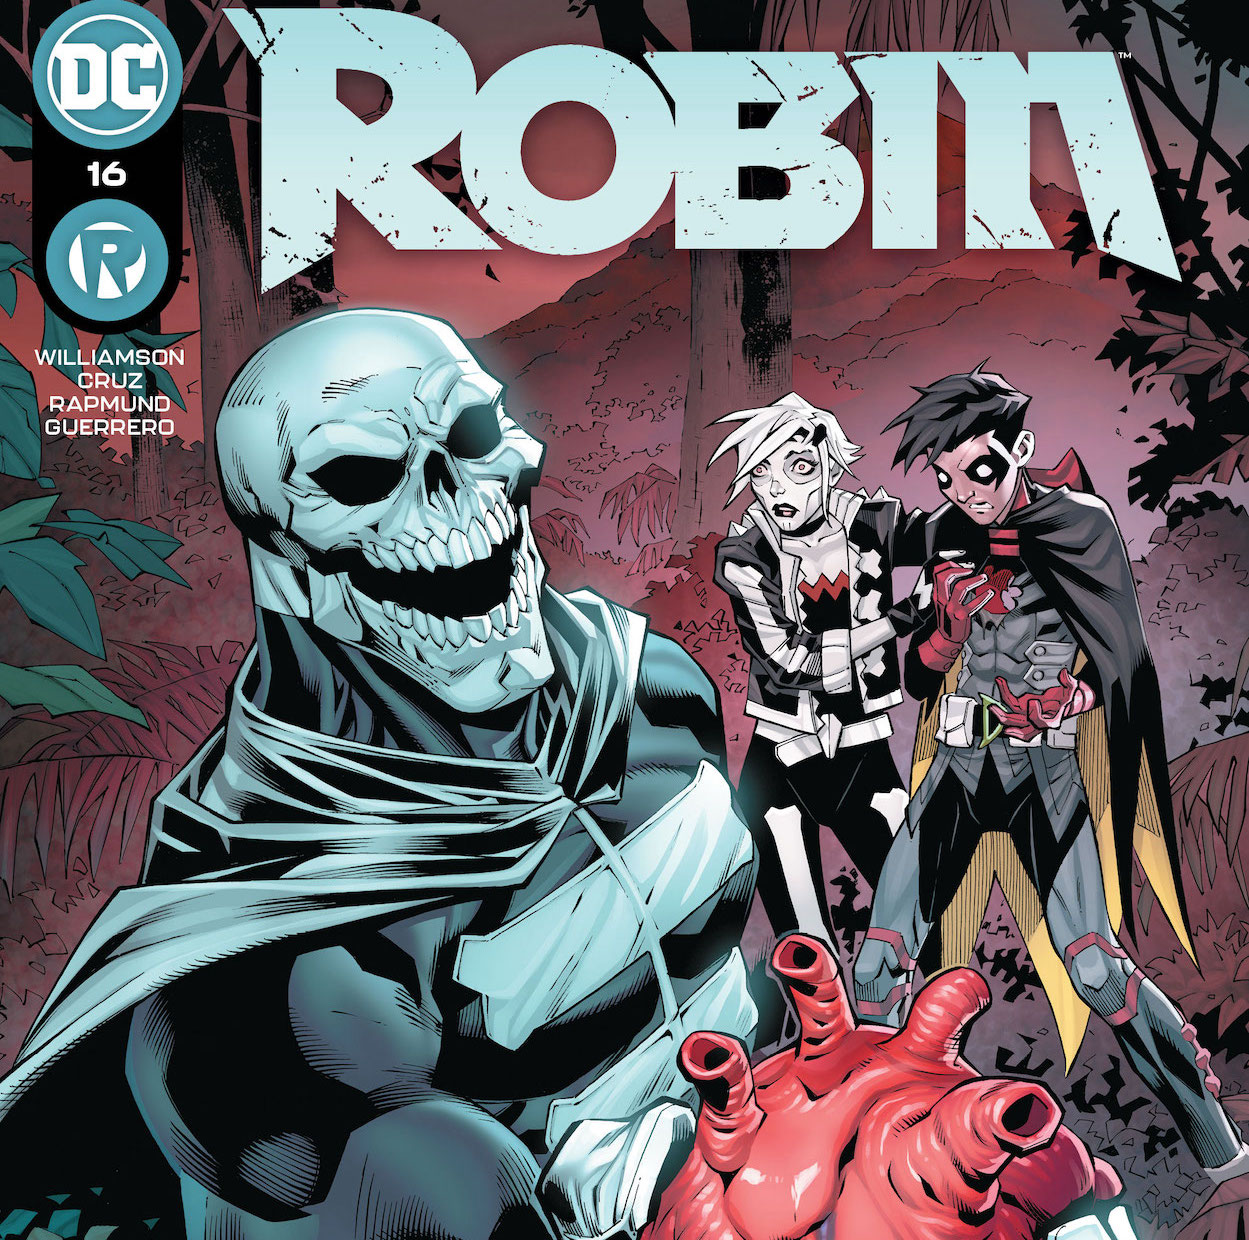 'Robin' #16 kicks off a story that'll involve romance and danger